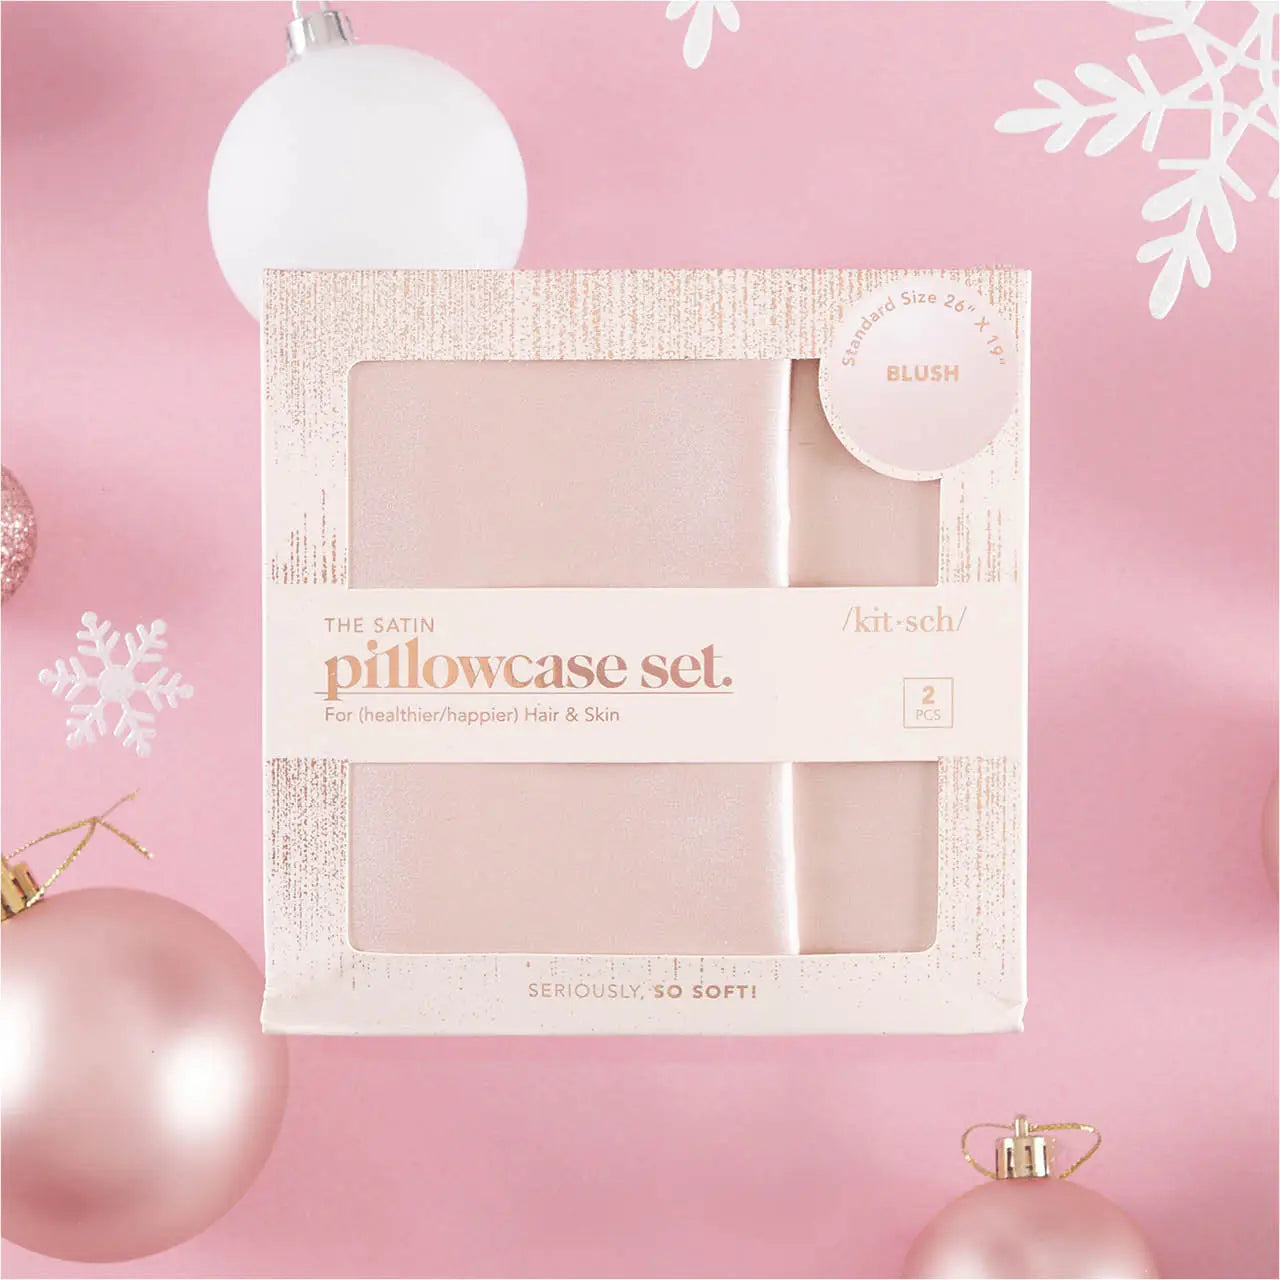 Holiday Satin Pillowcase Set in Blush